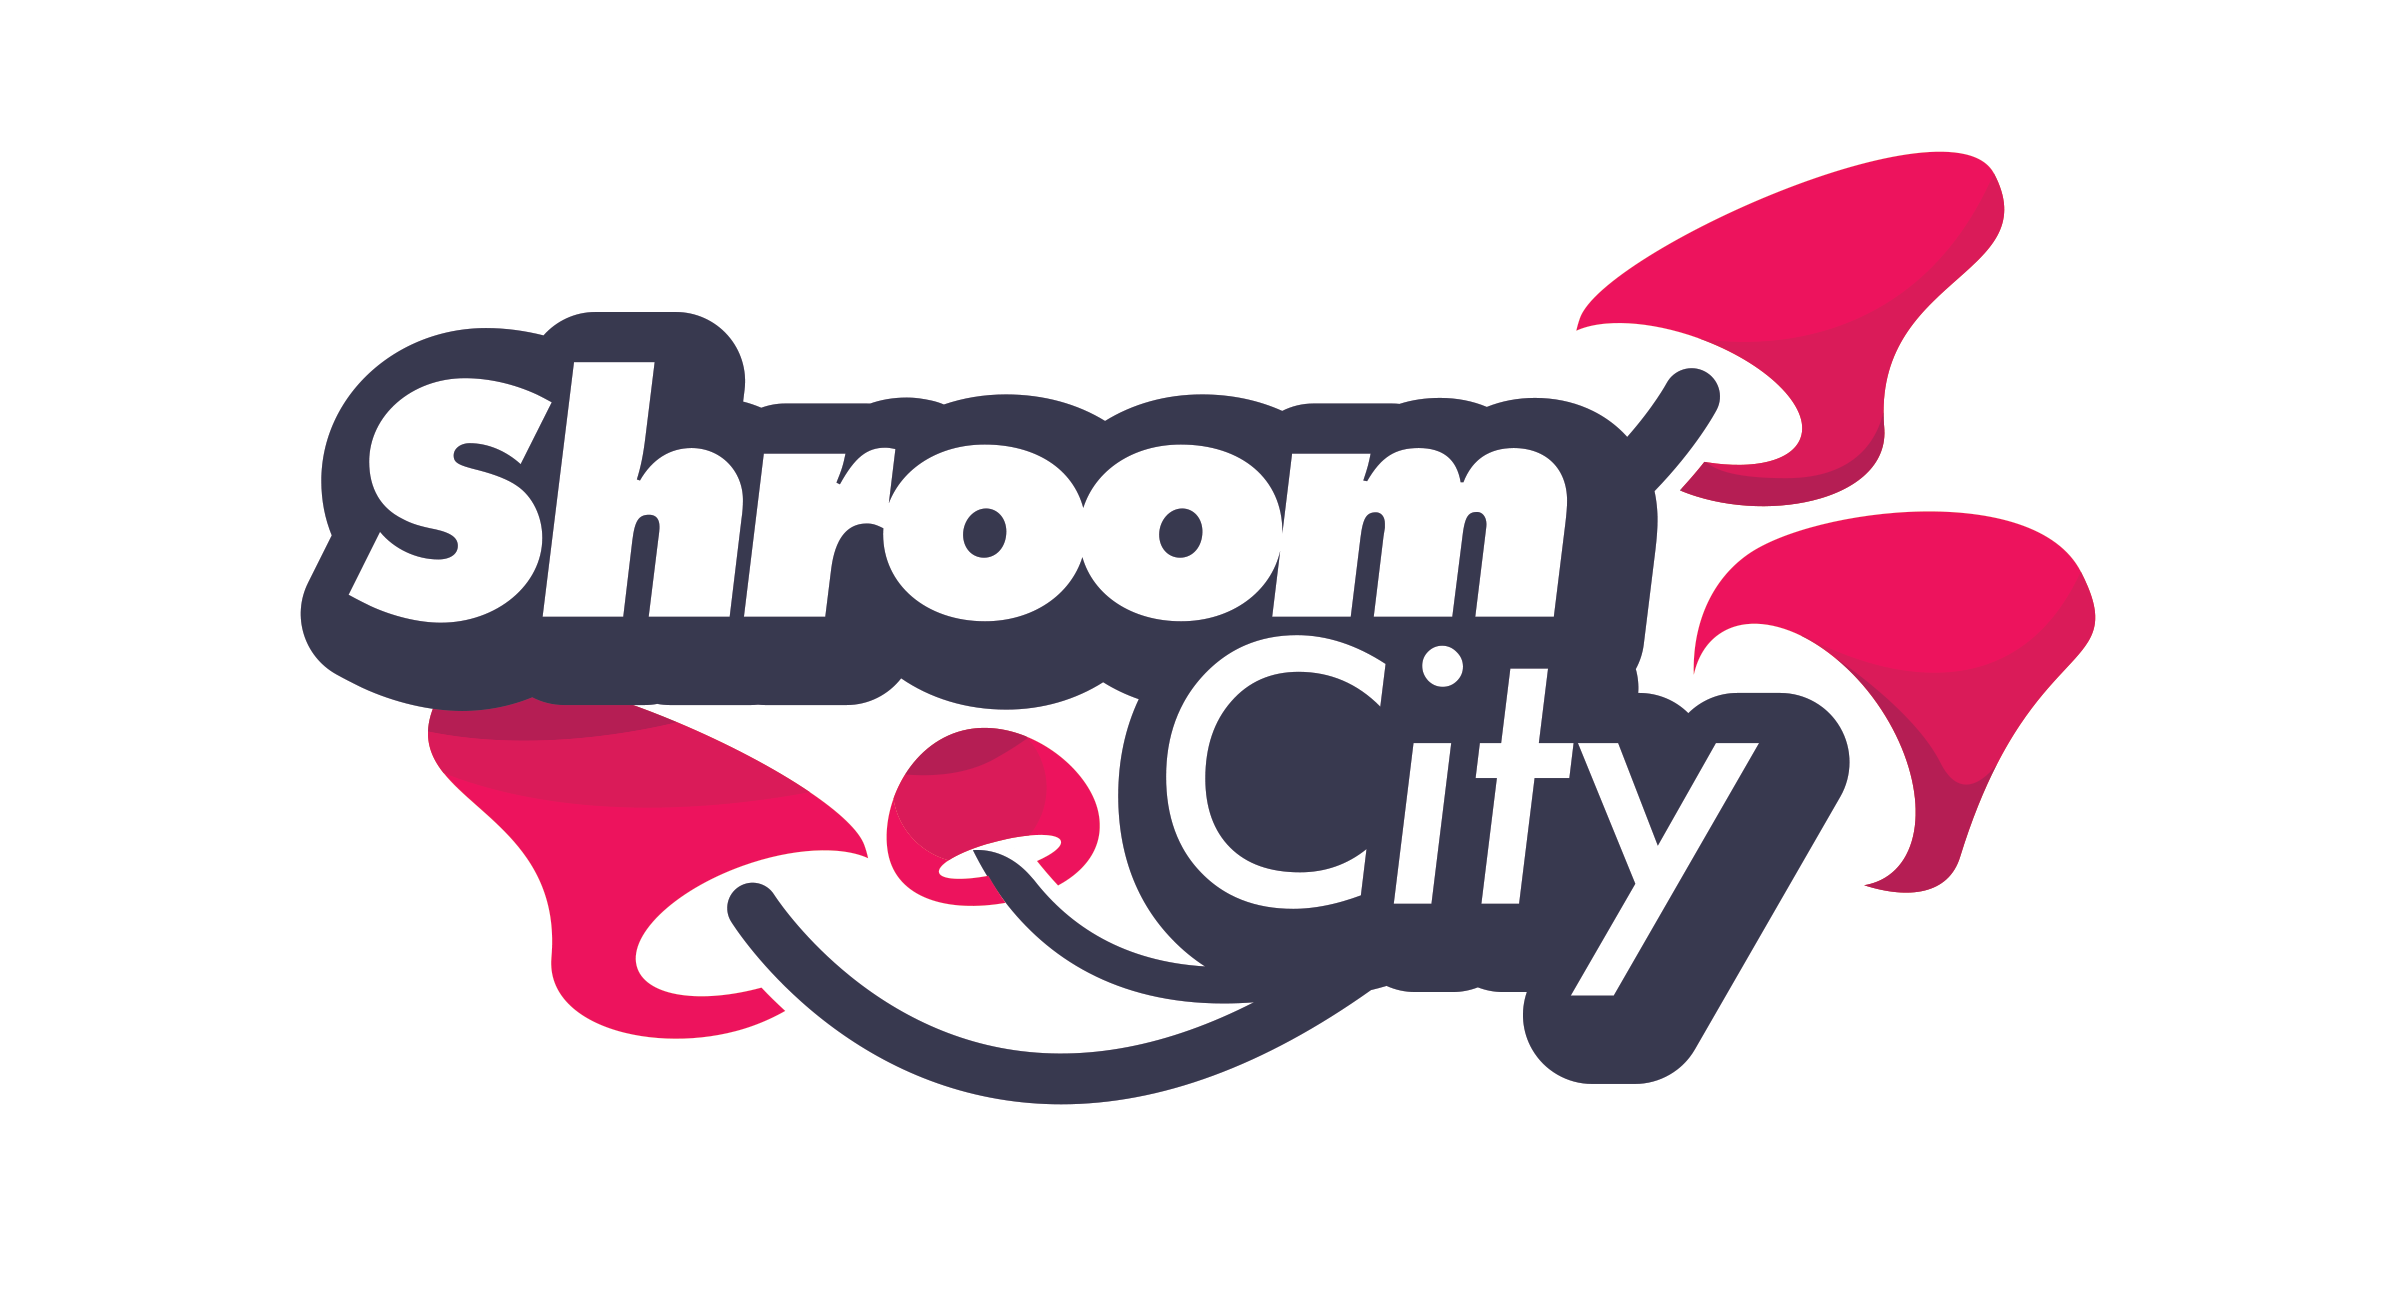 Welcome to Shroom City